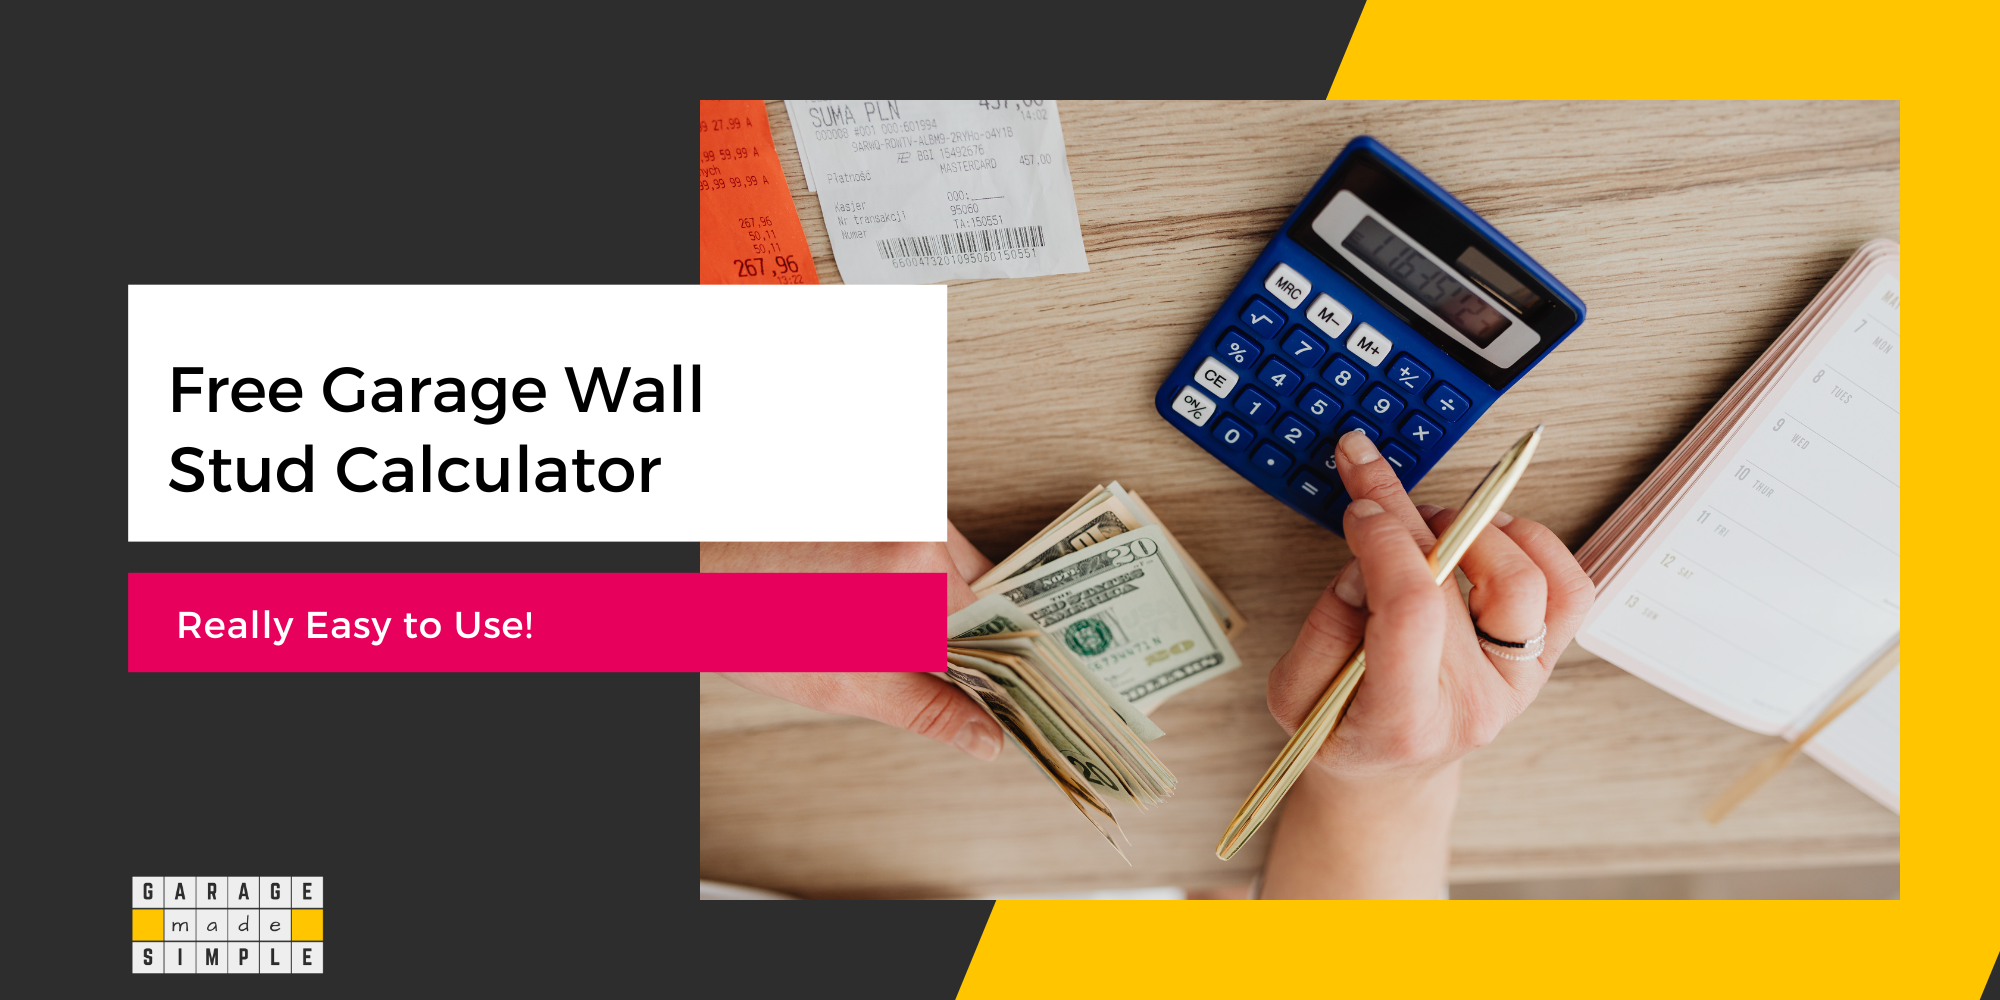 Free Garage Wall Stud Calculator